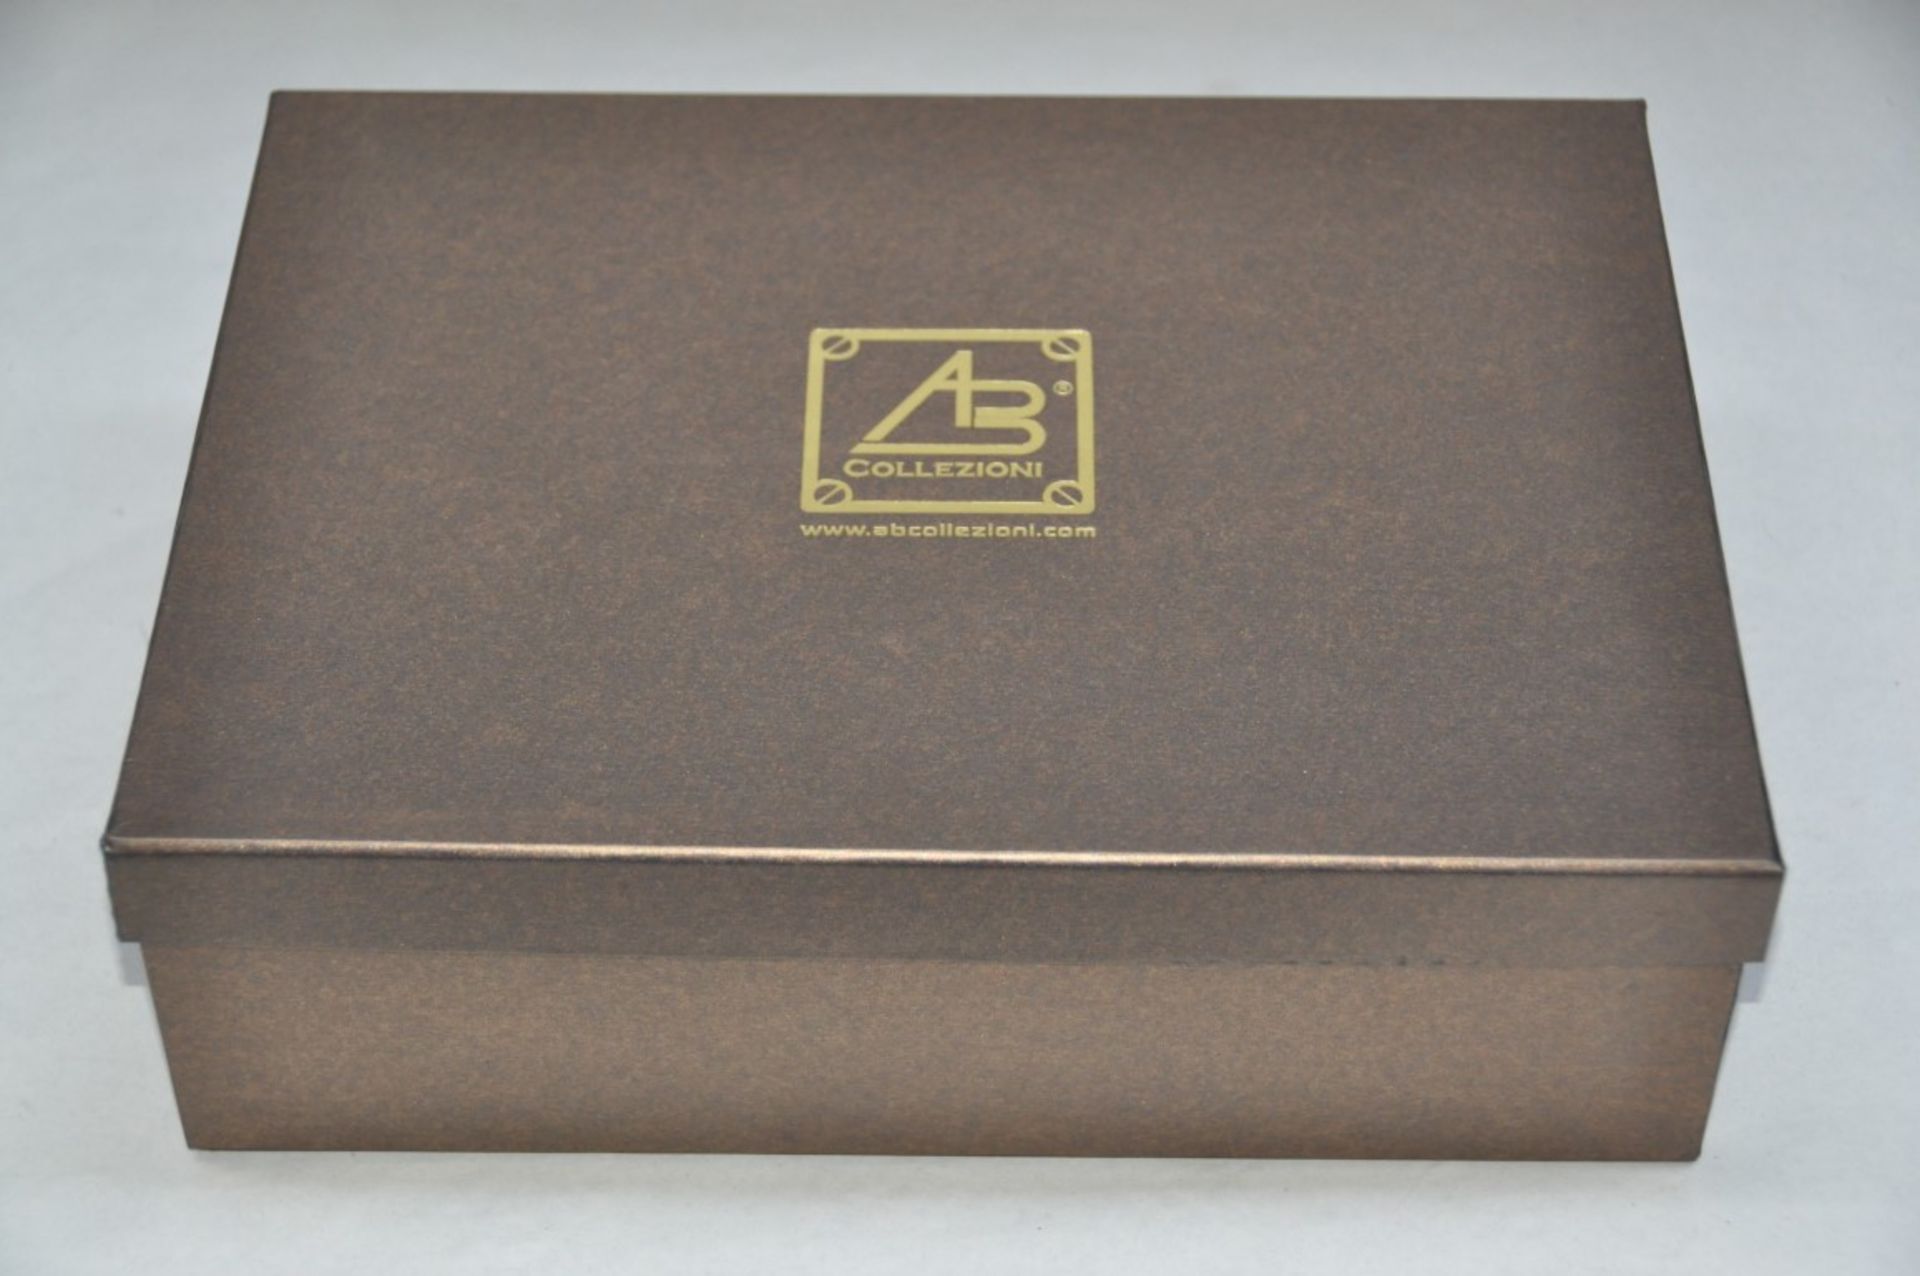 1 x "AB Collezioni" Italian Genuine Leather-Bound Luxury POKER SET (34048) - Ref LT003  - Features - Image 6 of 8